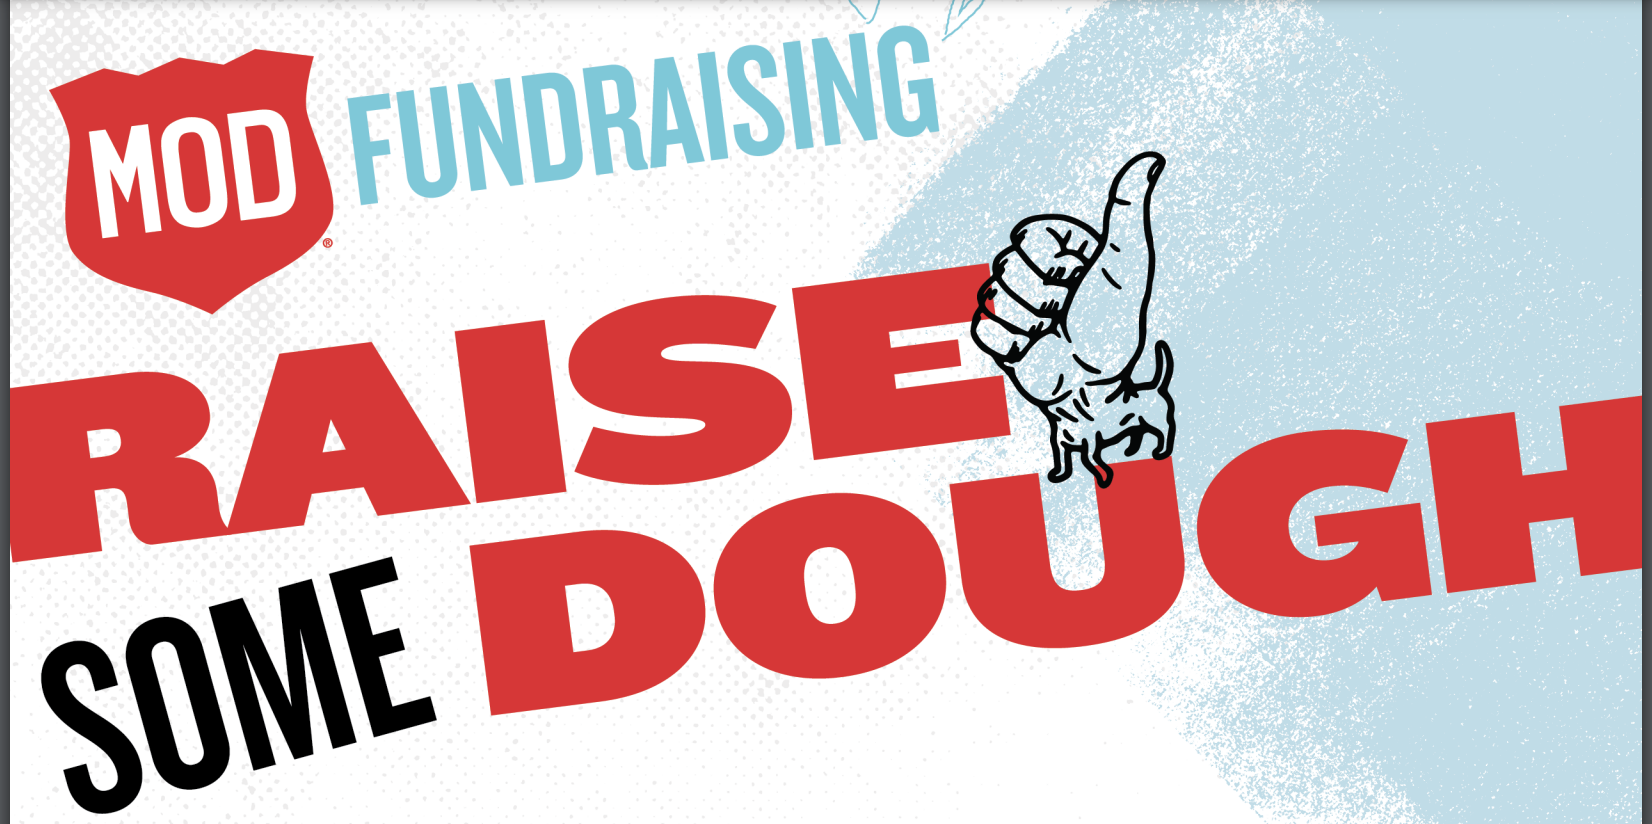 Slogan that reads "MOD fundraising Raise some dough".